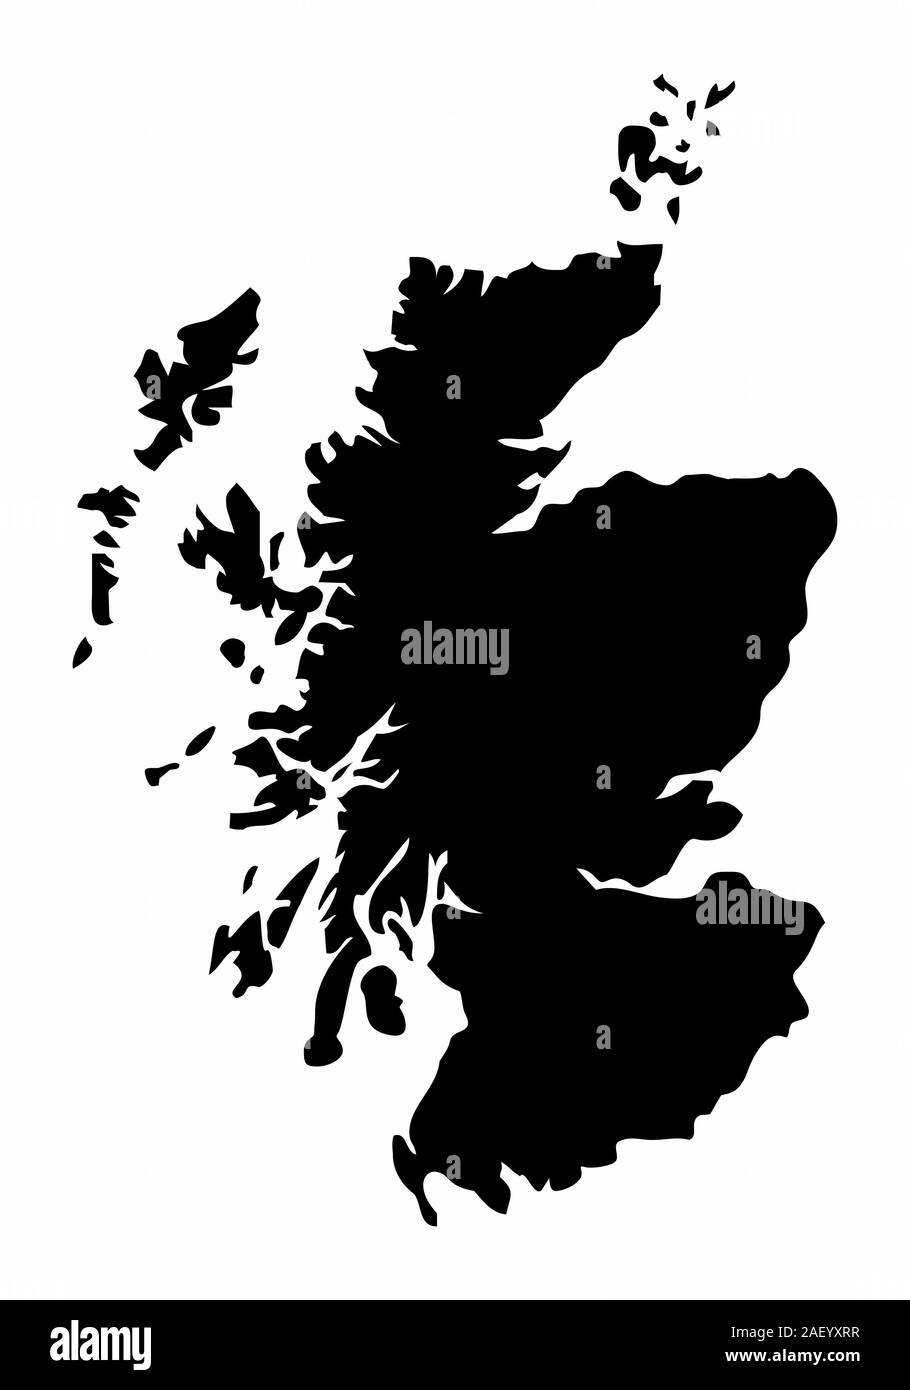 Scotland silhouette map Stock Vector